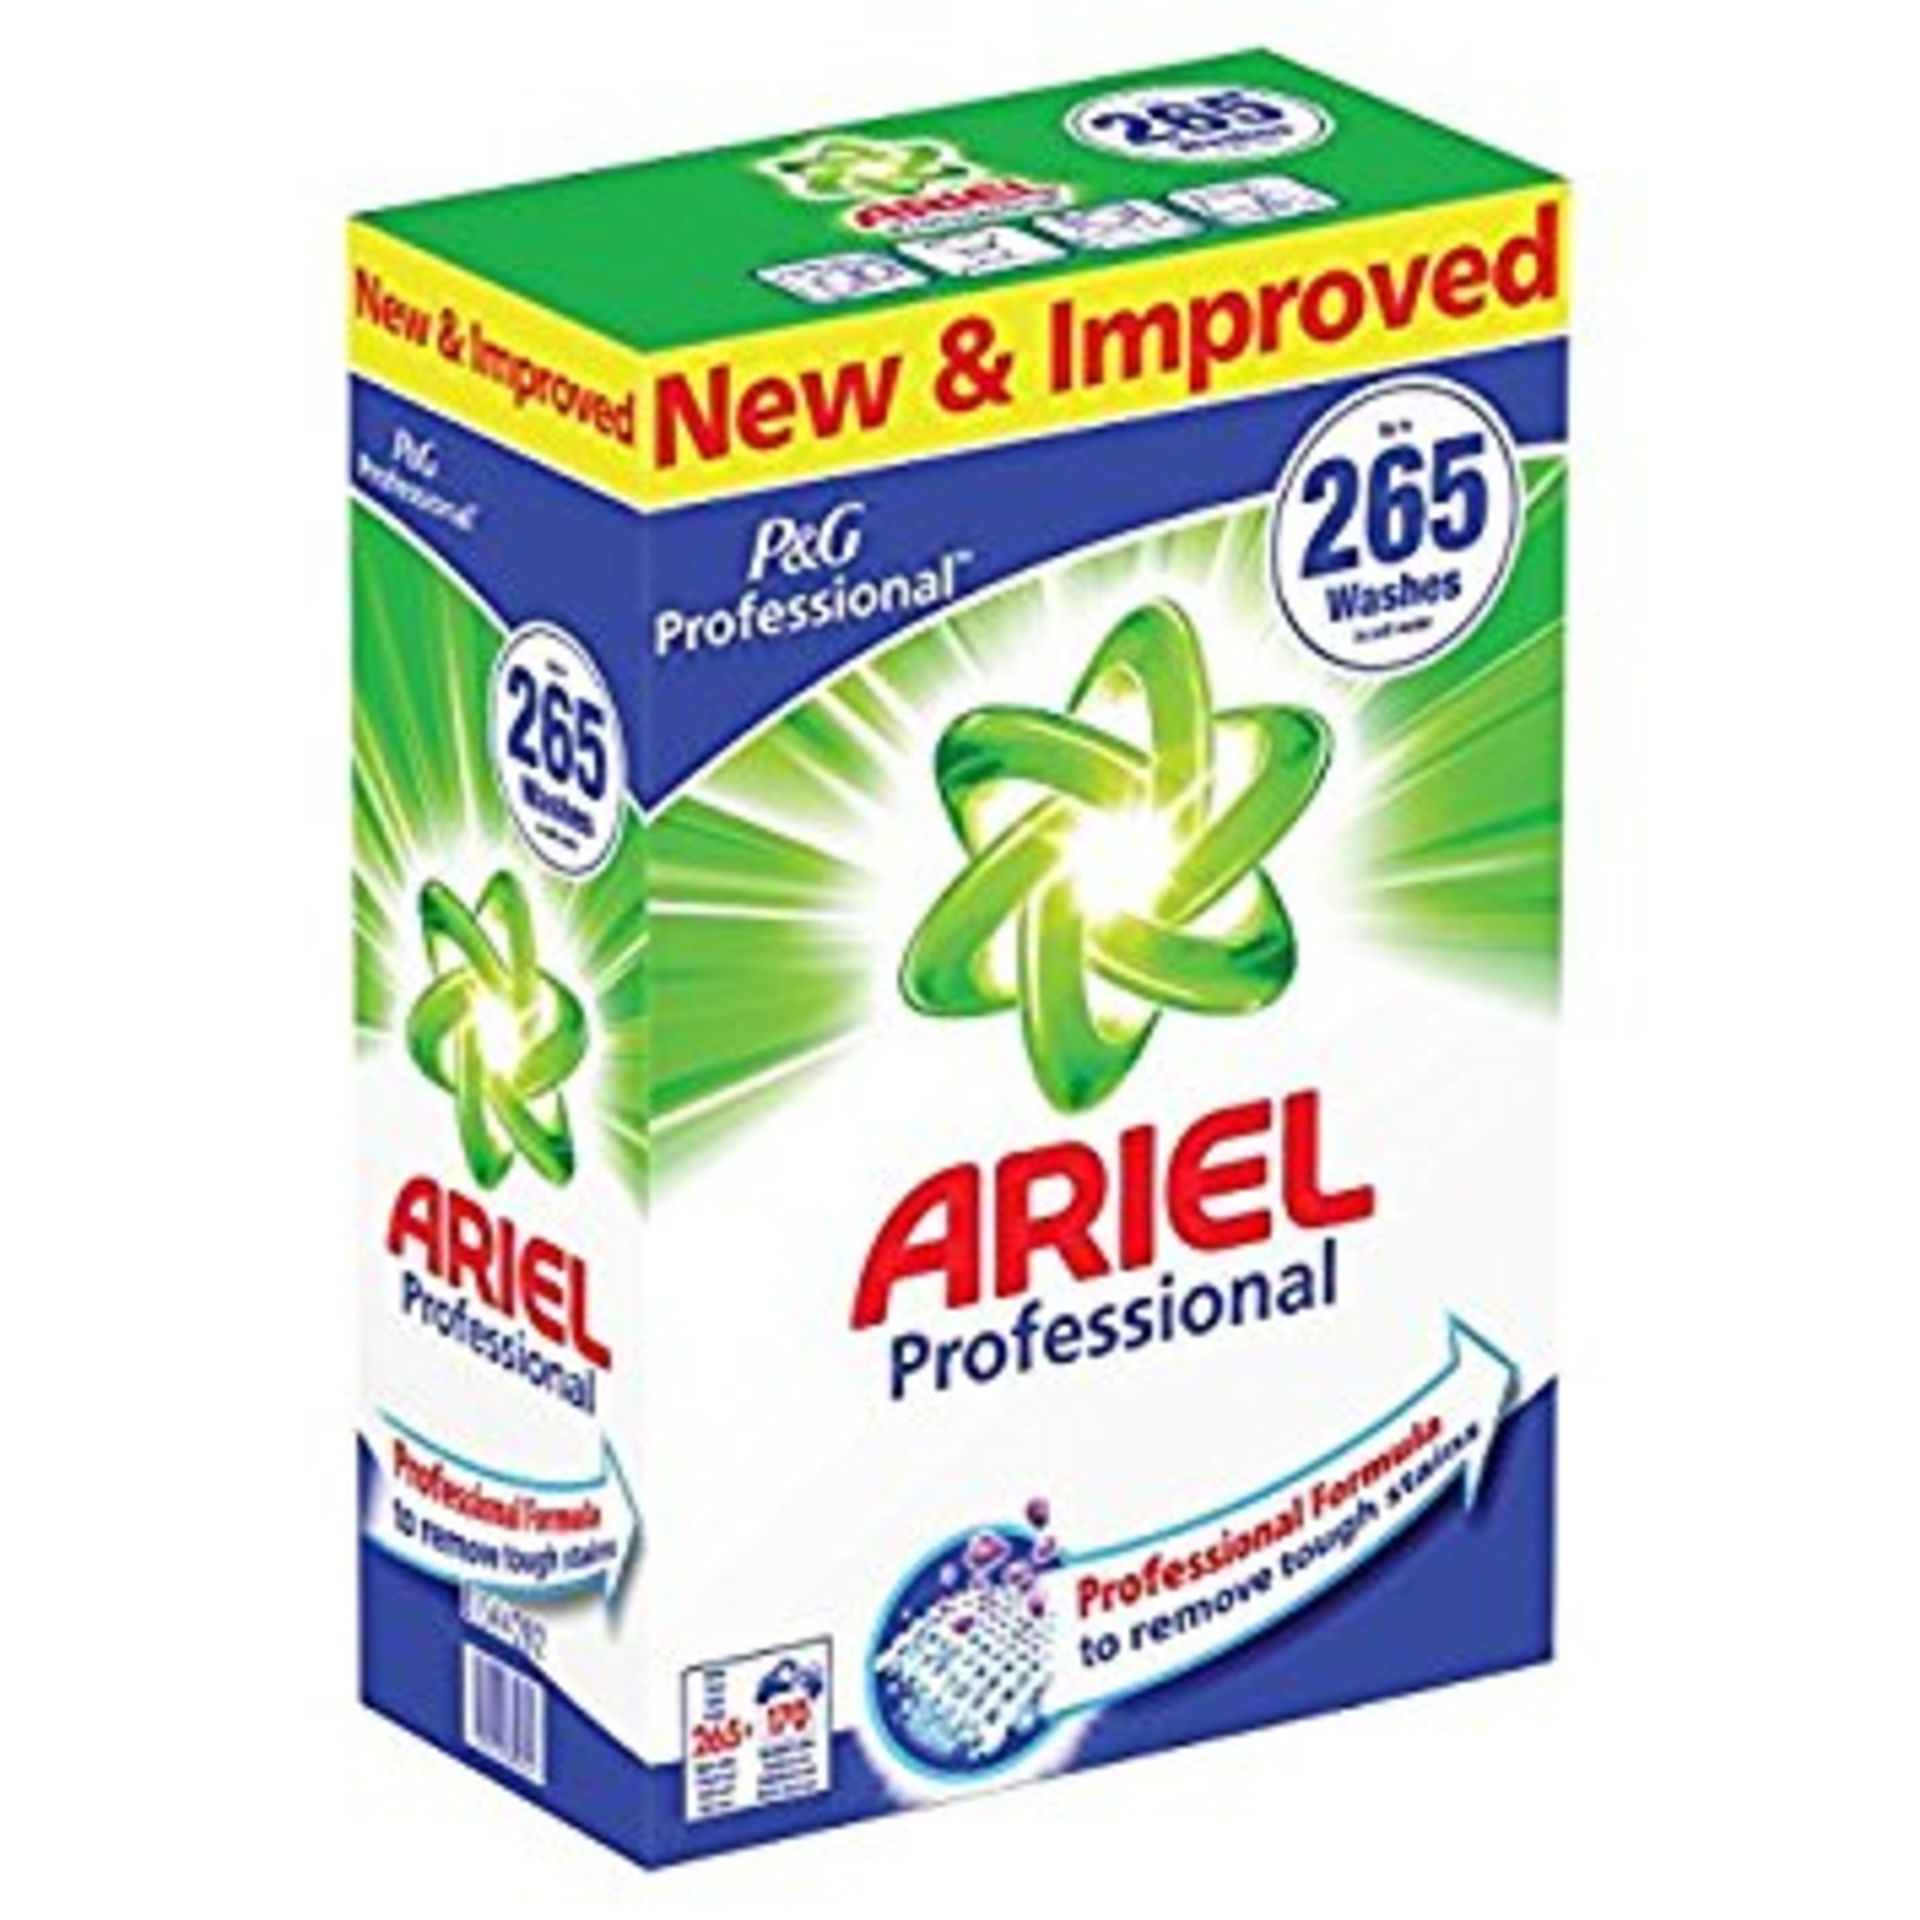 V *TRADE QTY* Brand New Ariel Professional XXL 265 Washes Washing Powder X120 YOUR BID PRICE TO BE